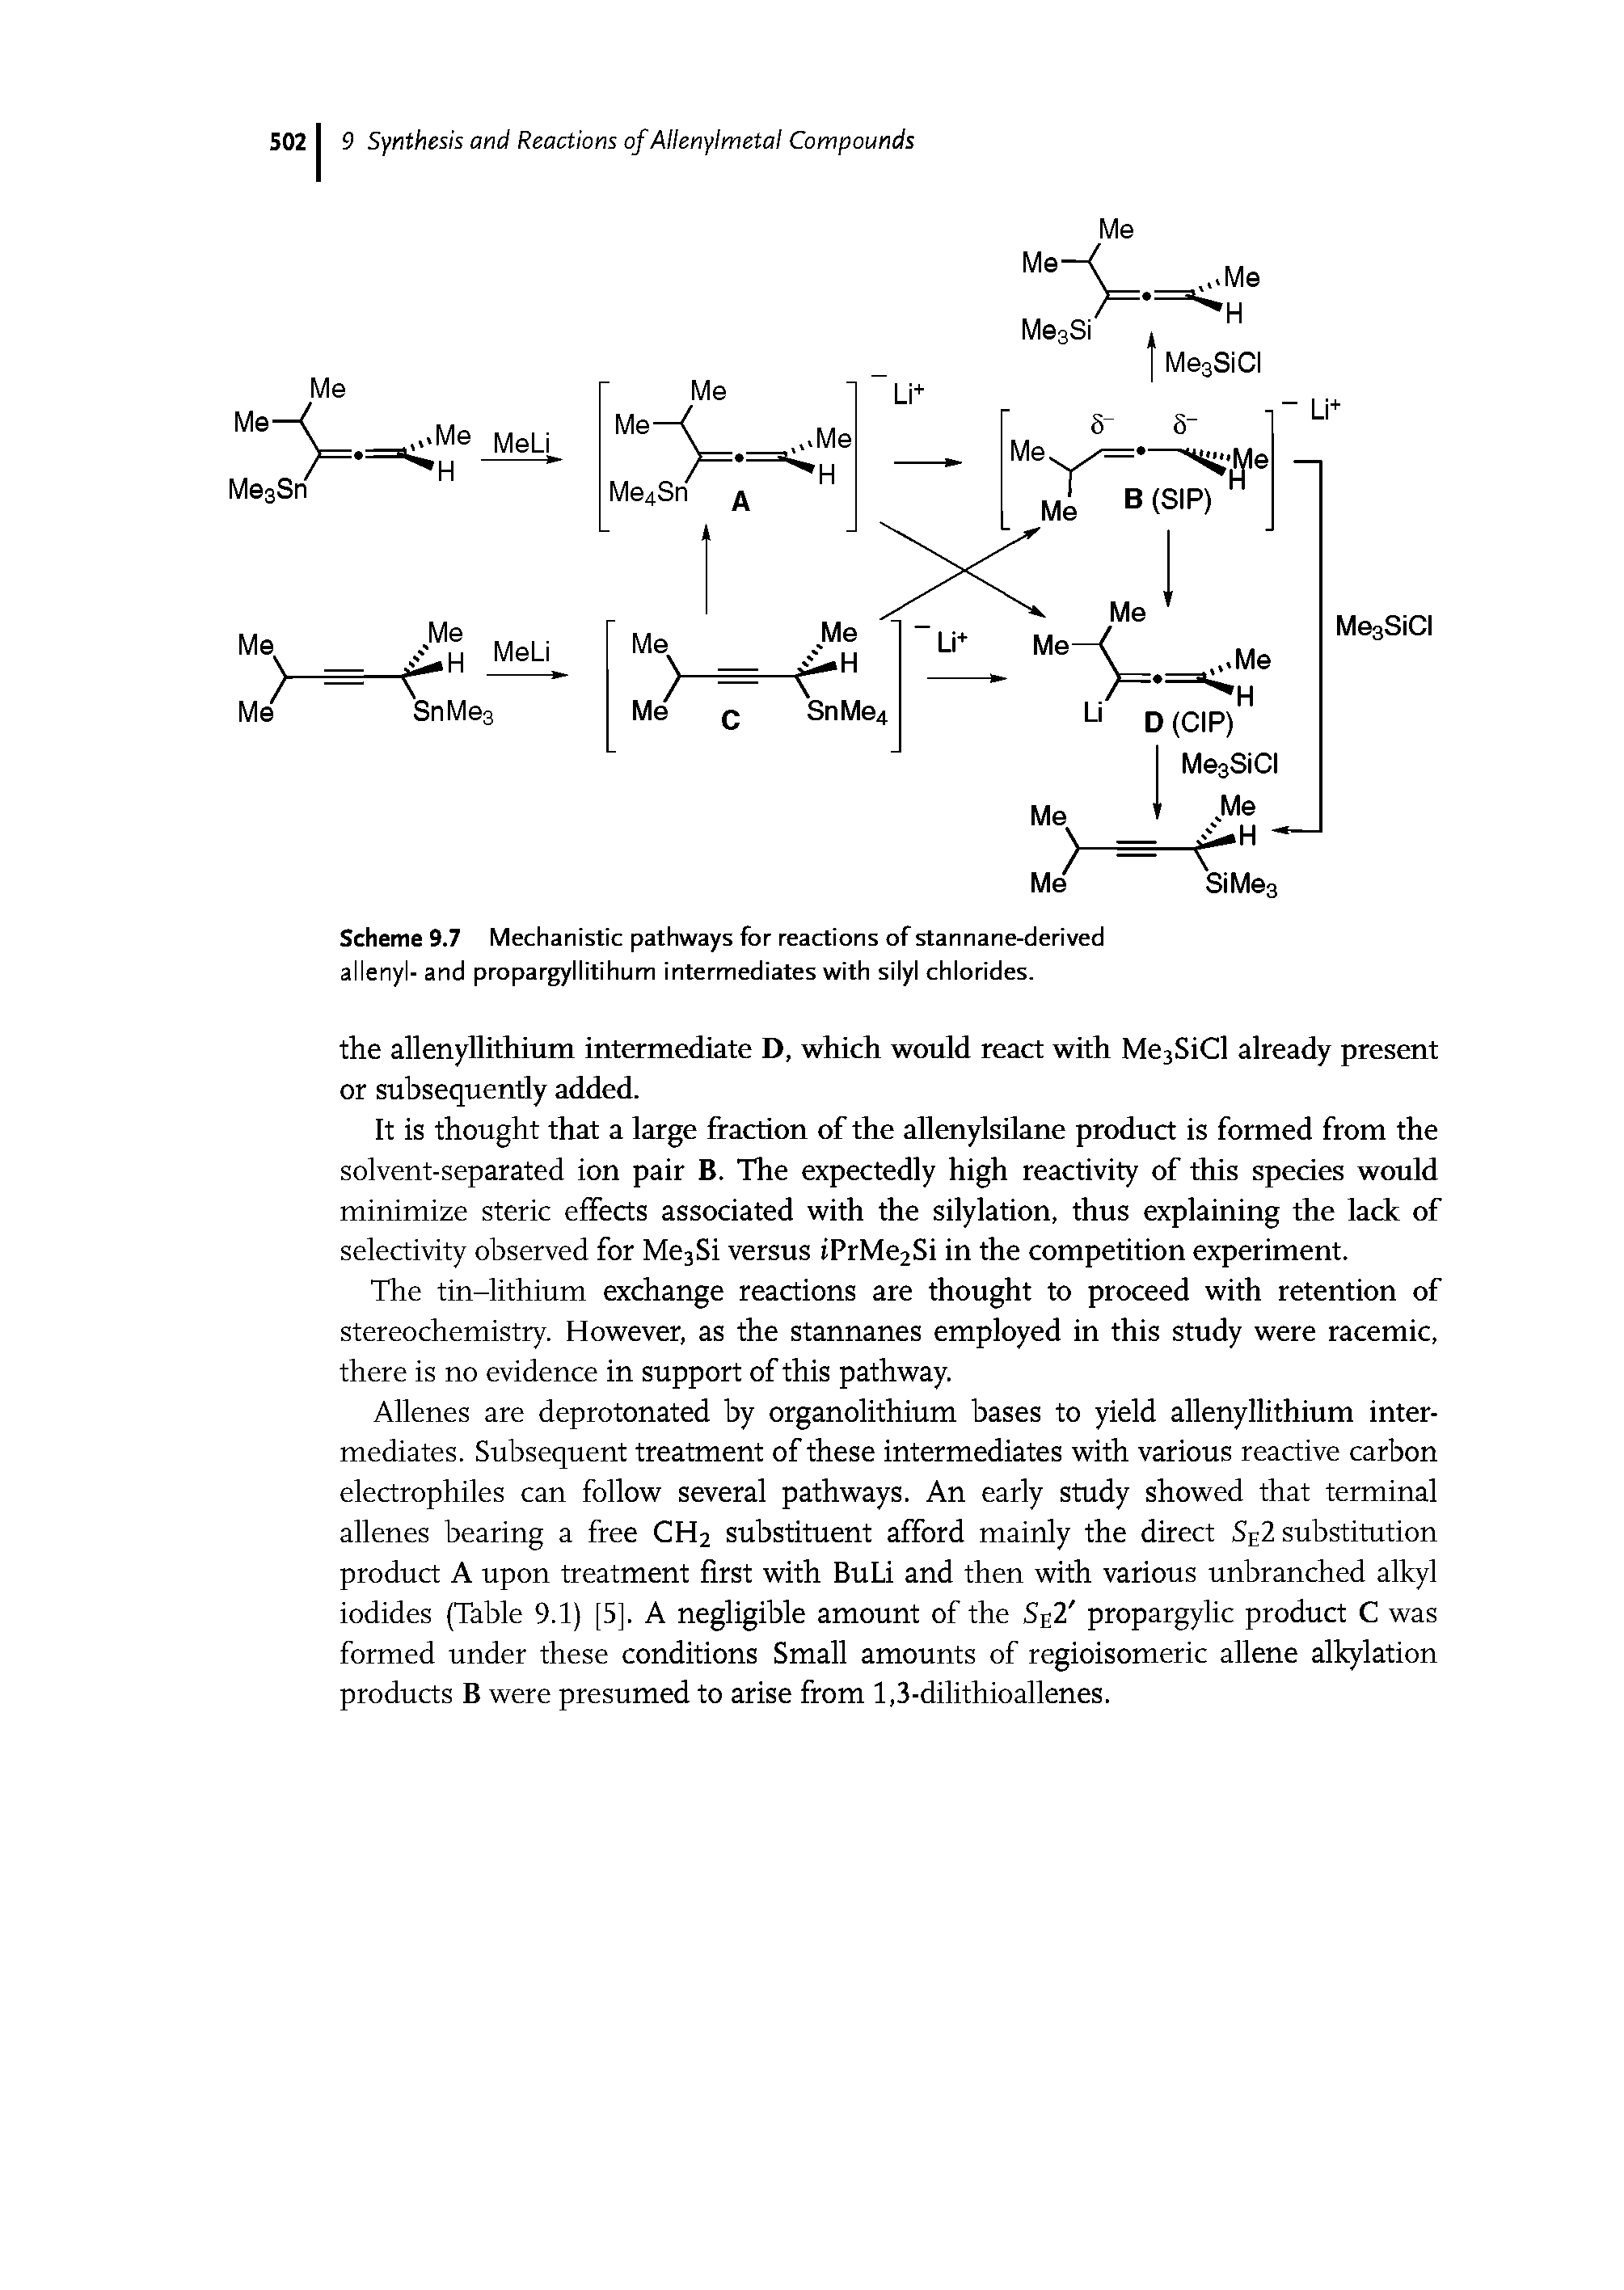 Scheme 9.7 Mechanistic pathways for reactions of stannane-derived allenyl- and propargyllitihum intermediates with silyl chlorides.